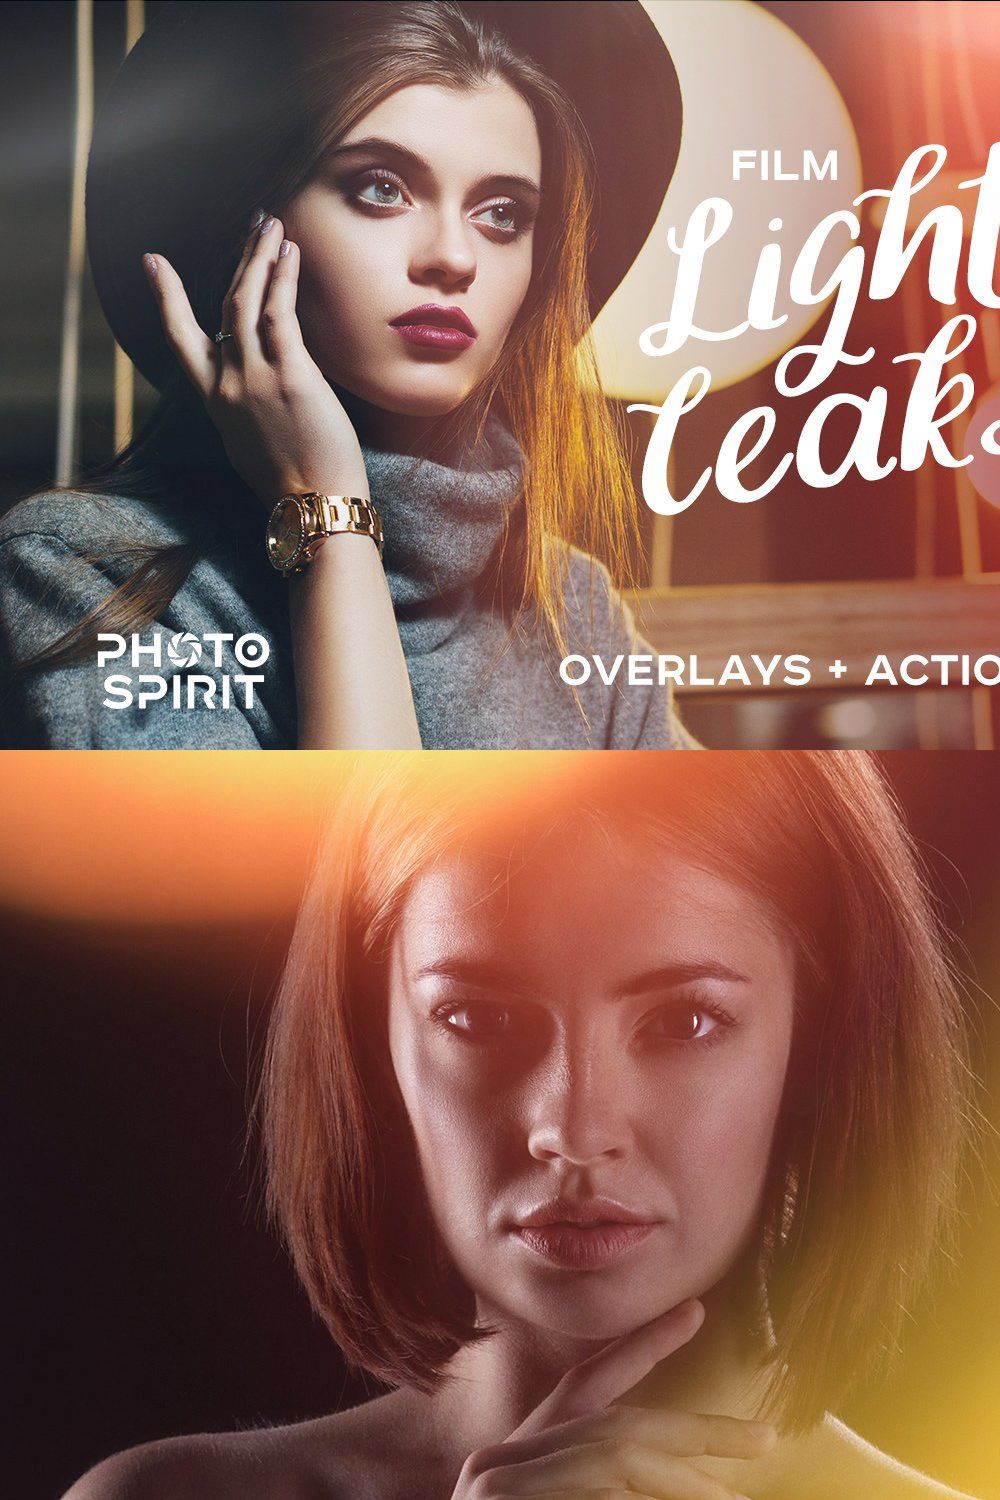 Film Light Leaks Overlays pinterest preview image.